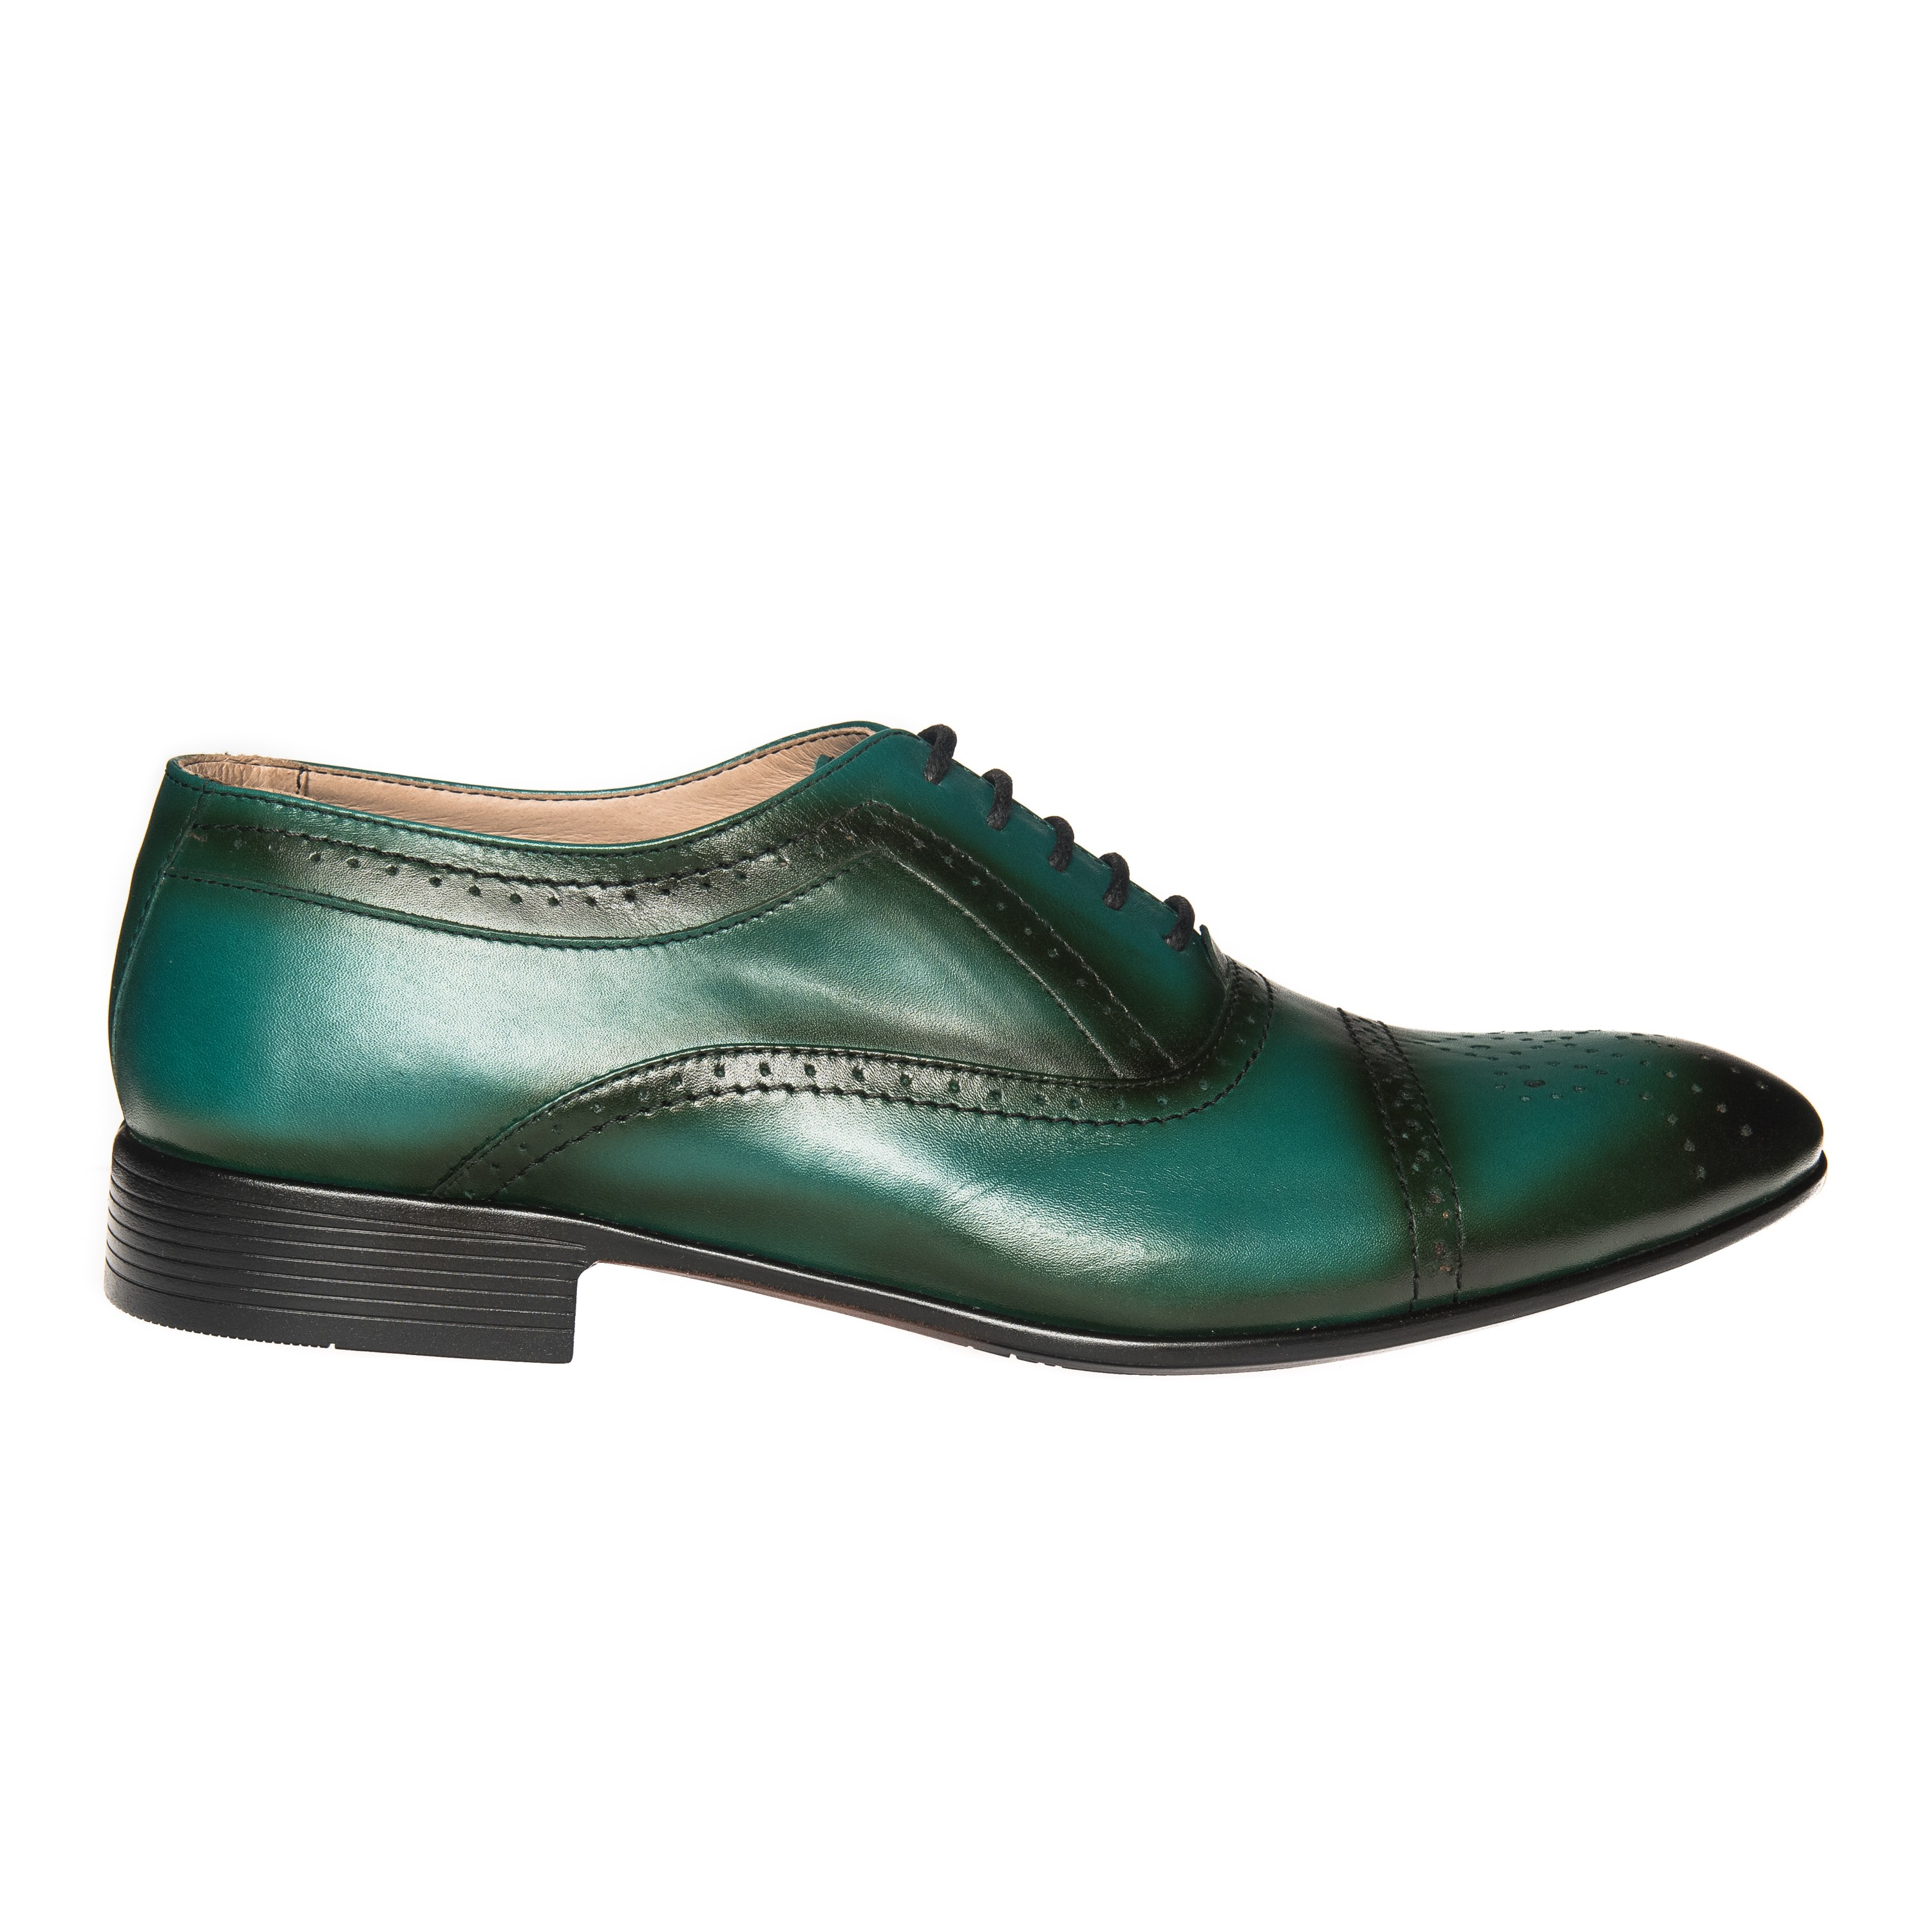 Pantofi barbati din piele naturala - Verde cu Varf Negru - 404 VVN